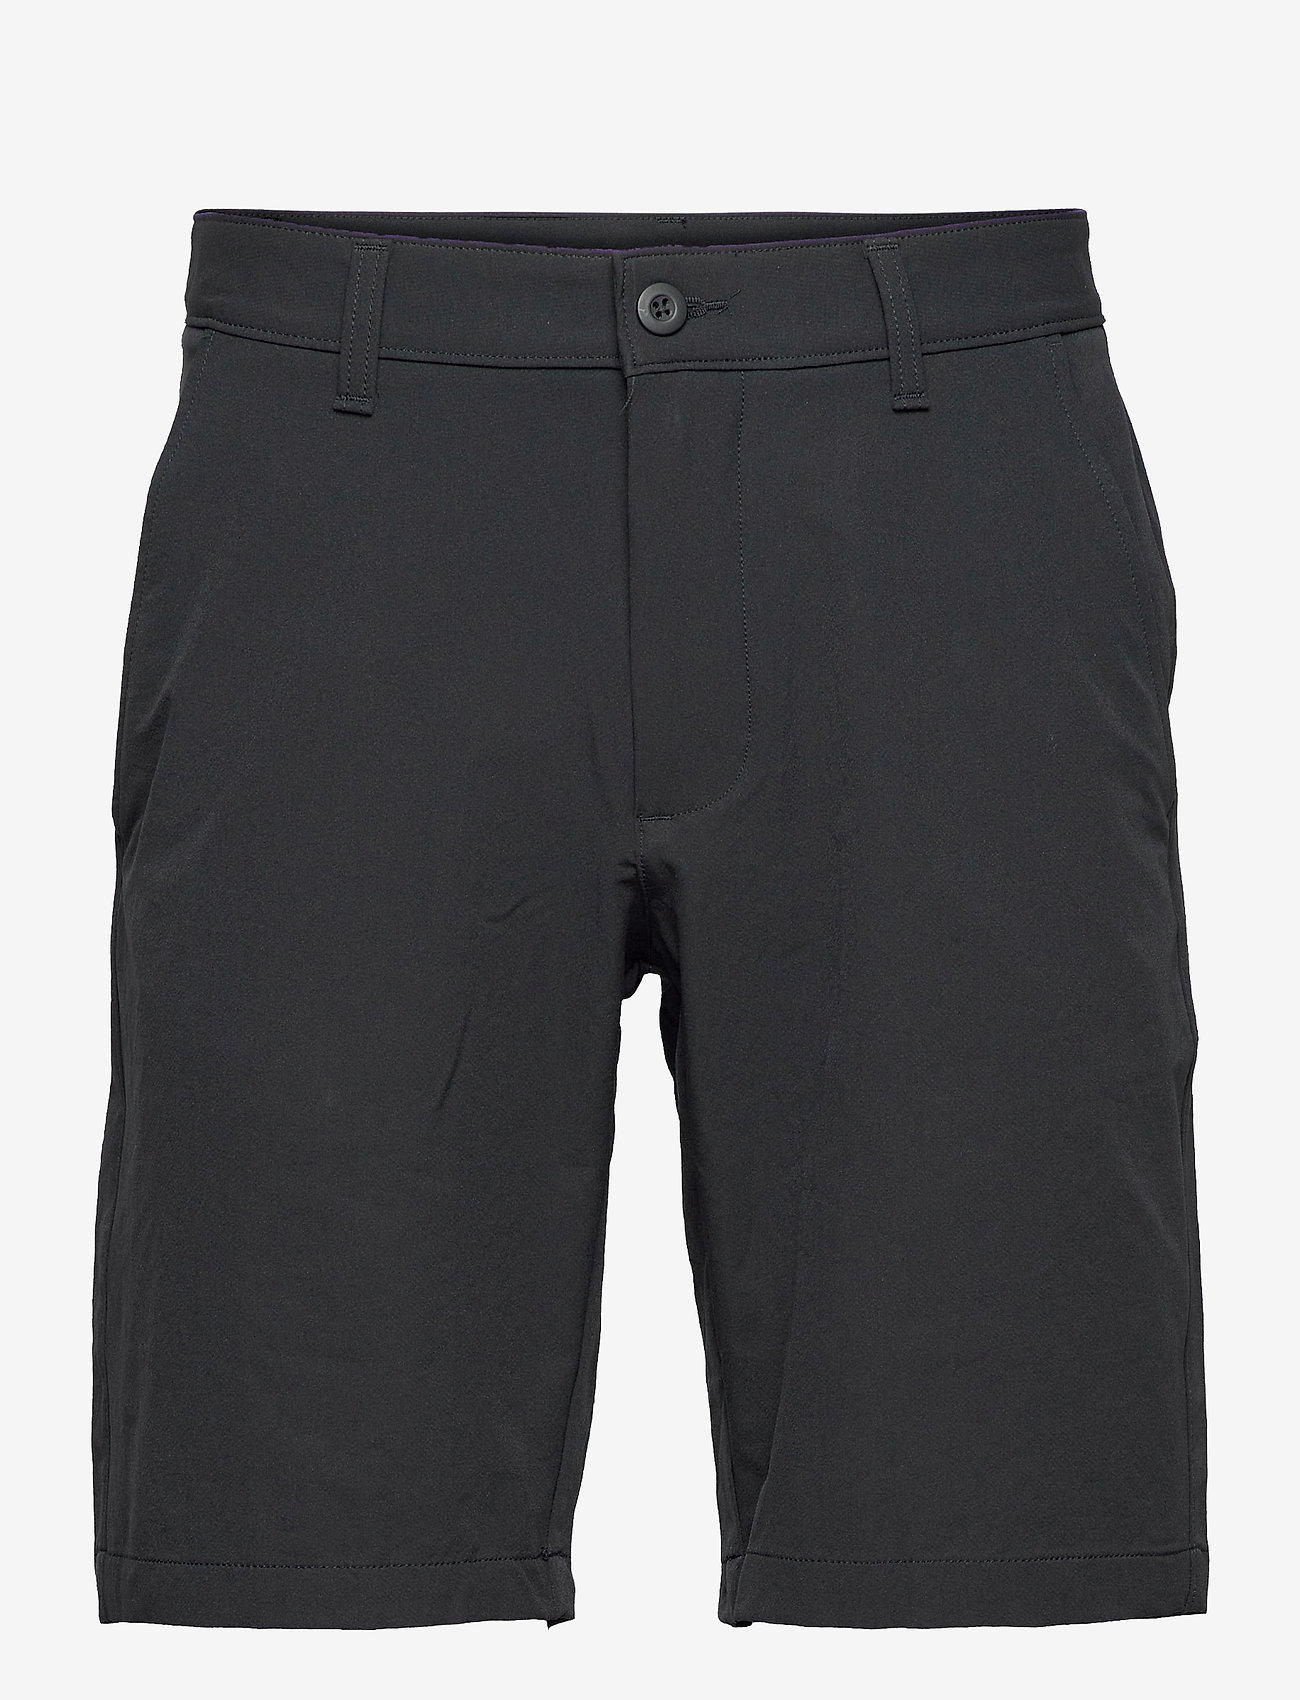 Under Armour - UA Tech Short - golf shorts - black - 0